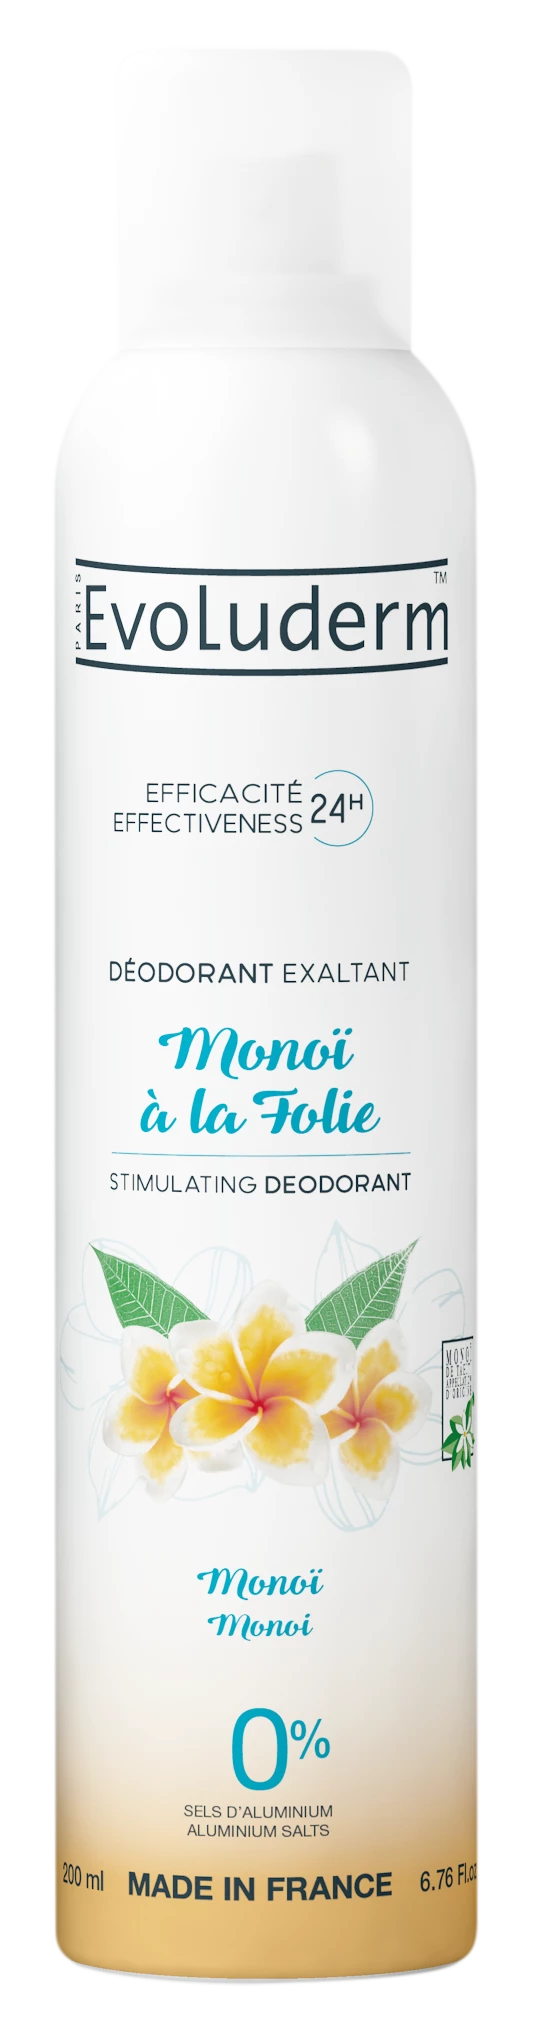 Monoi-Deodorant à la Folie Monoï, 200 ml - EVOLUDERM